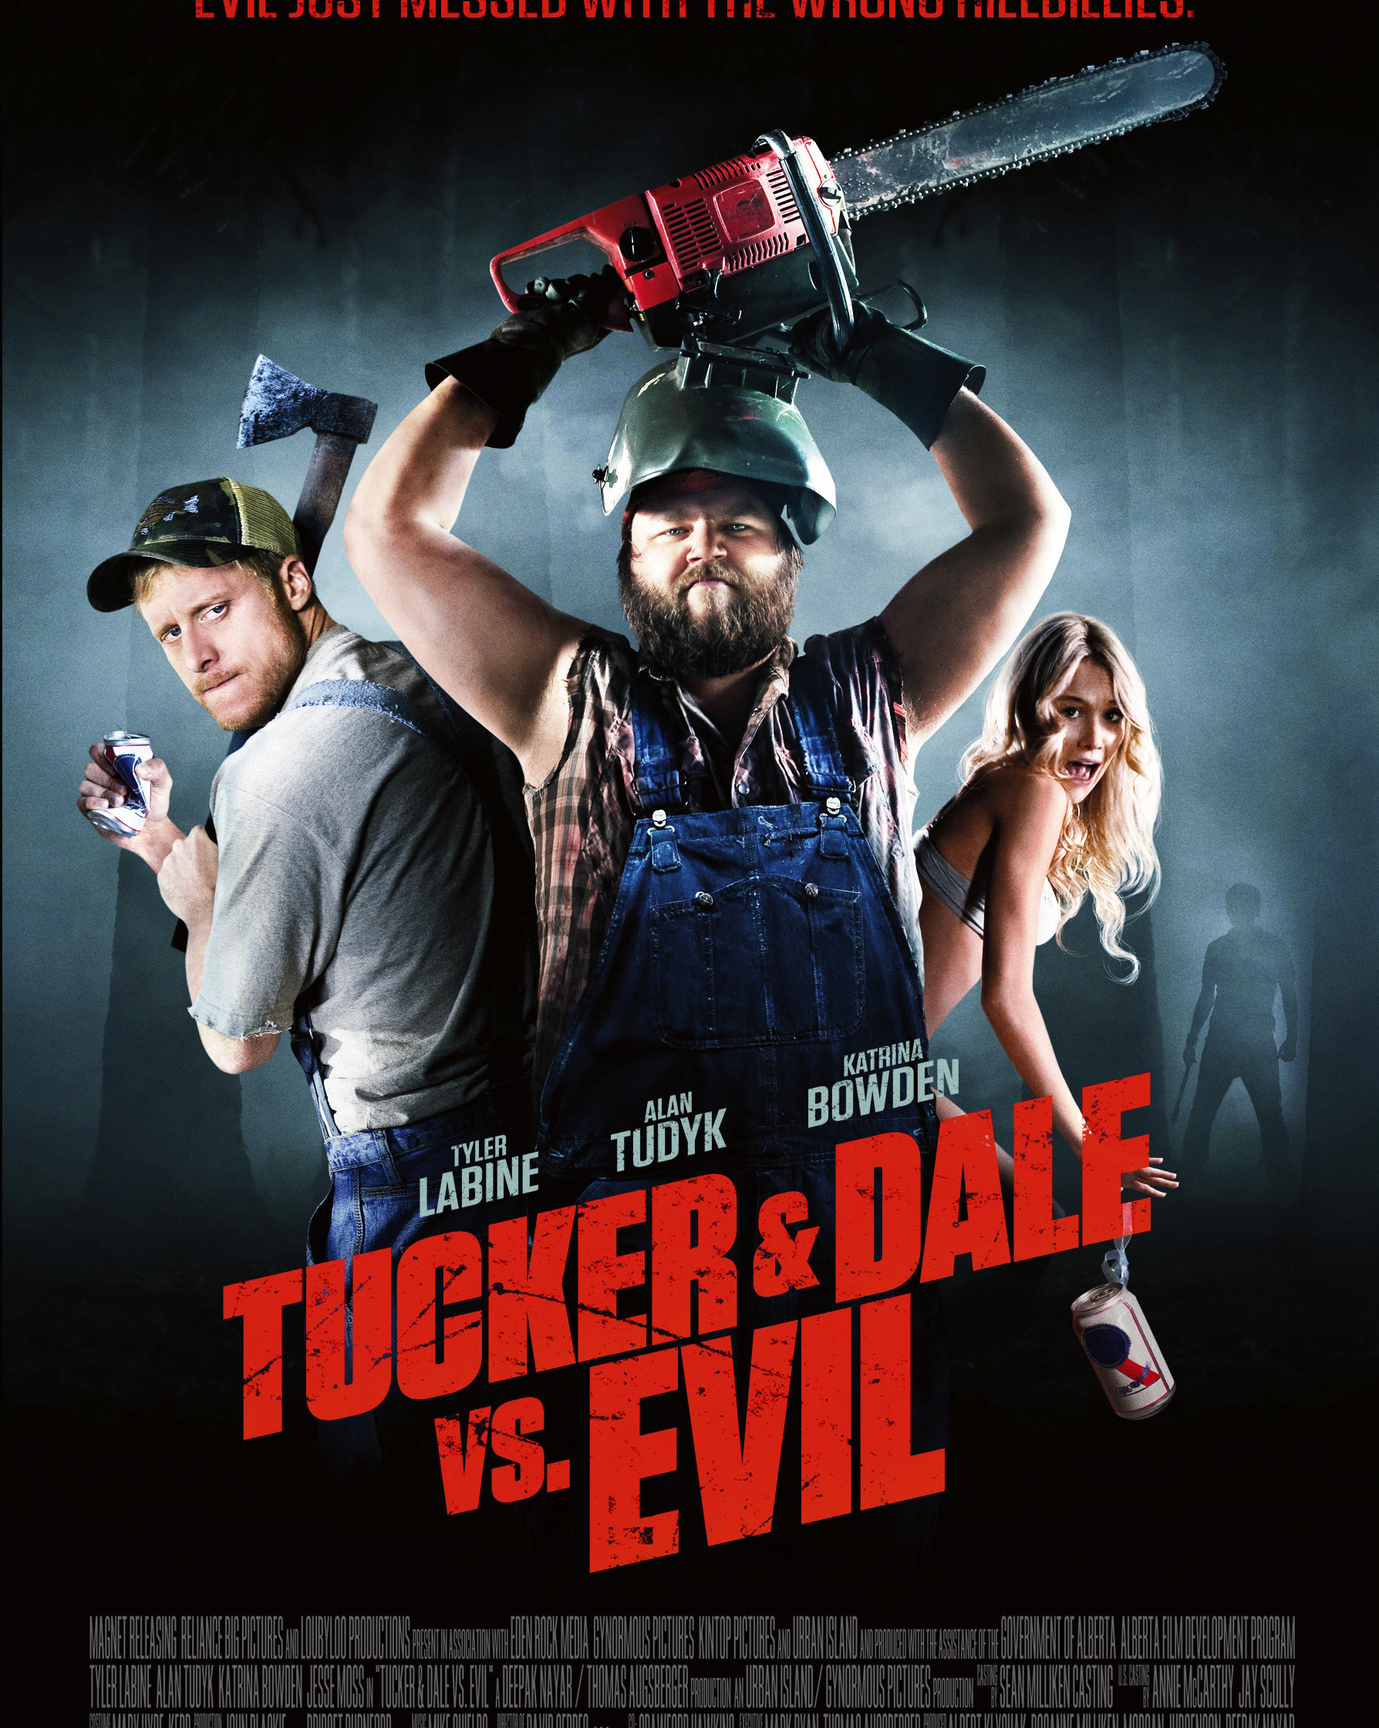 Tucker and Dale vs Evil Poster